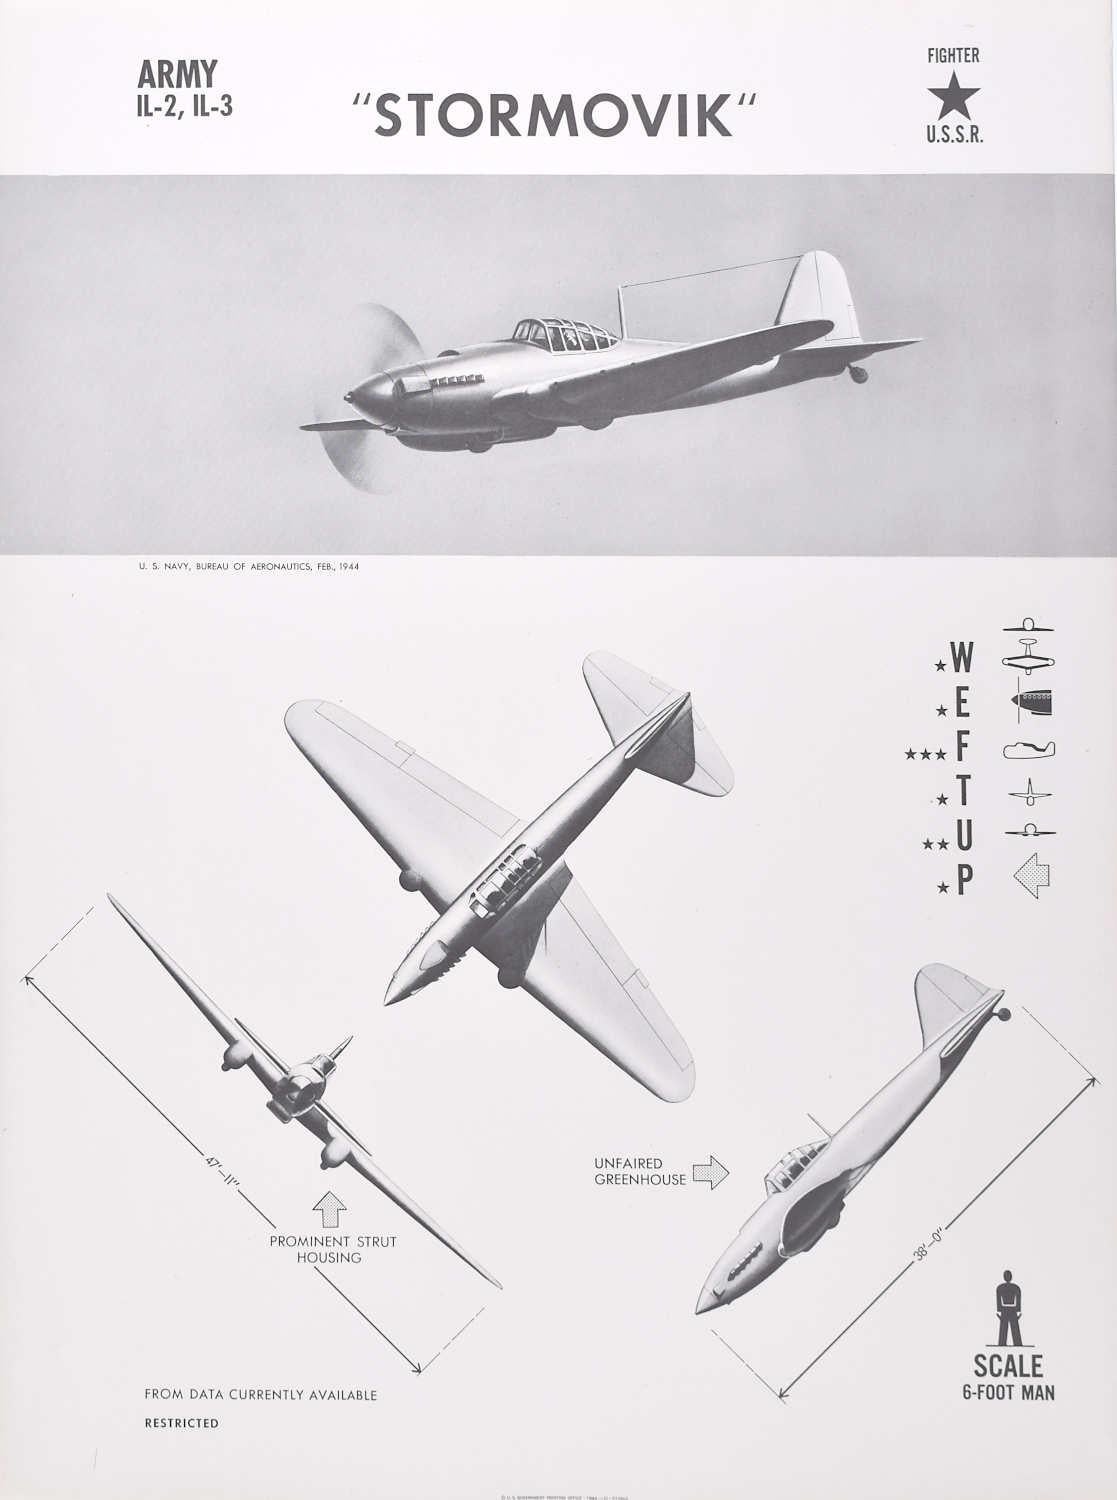 1944 "Stormovik" USSR fighter plane identification poster WW2 - Print by Unknown